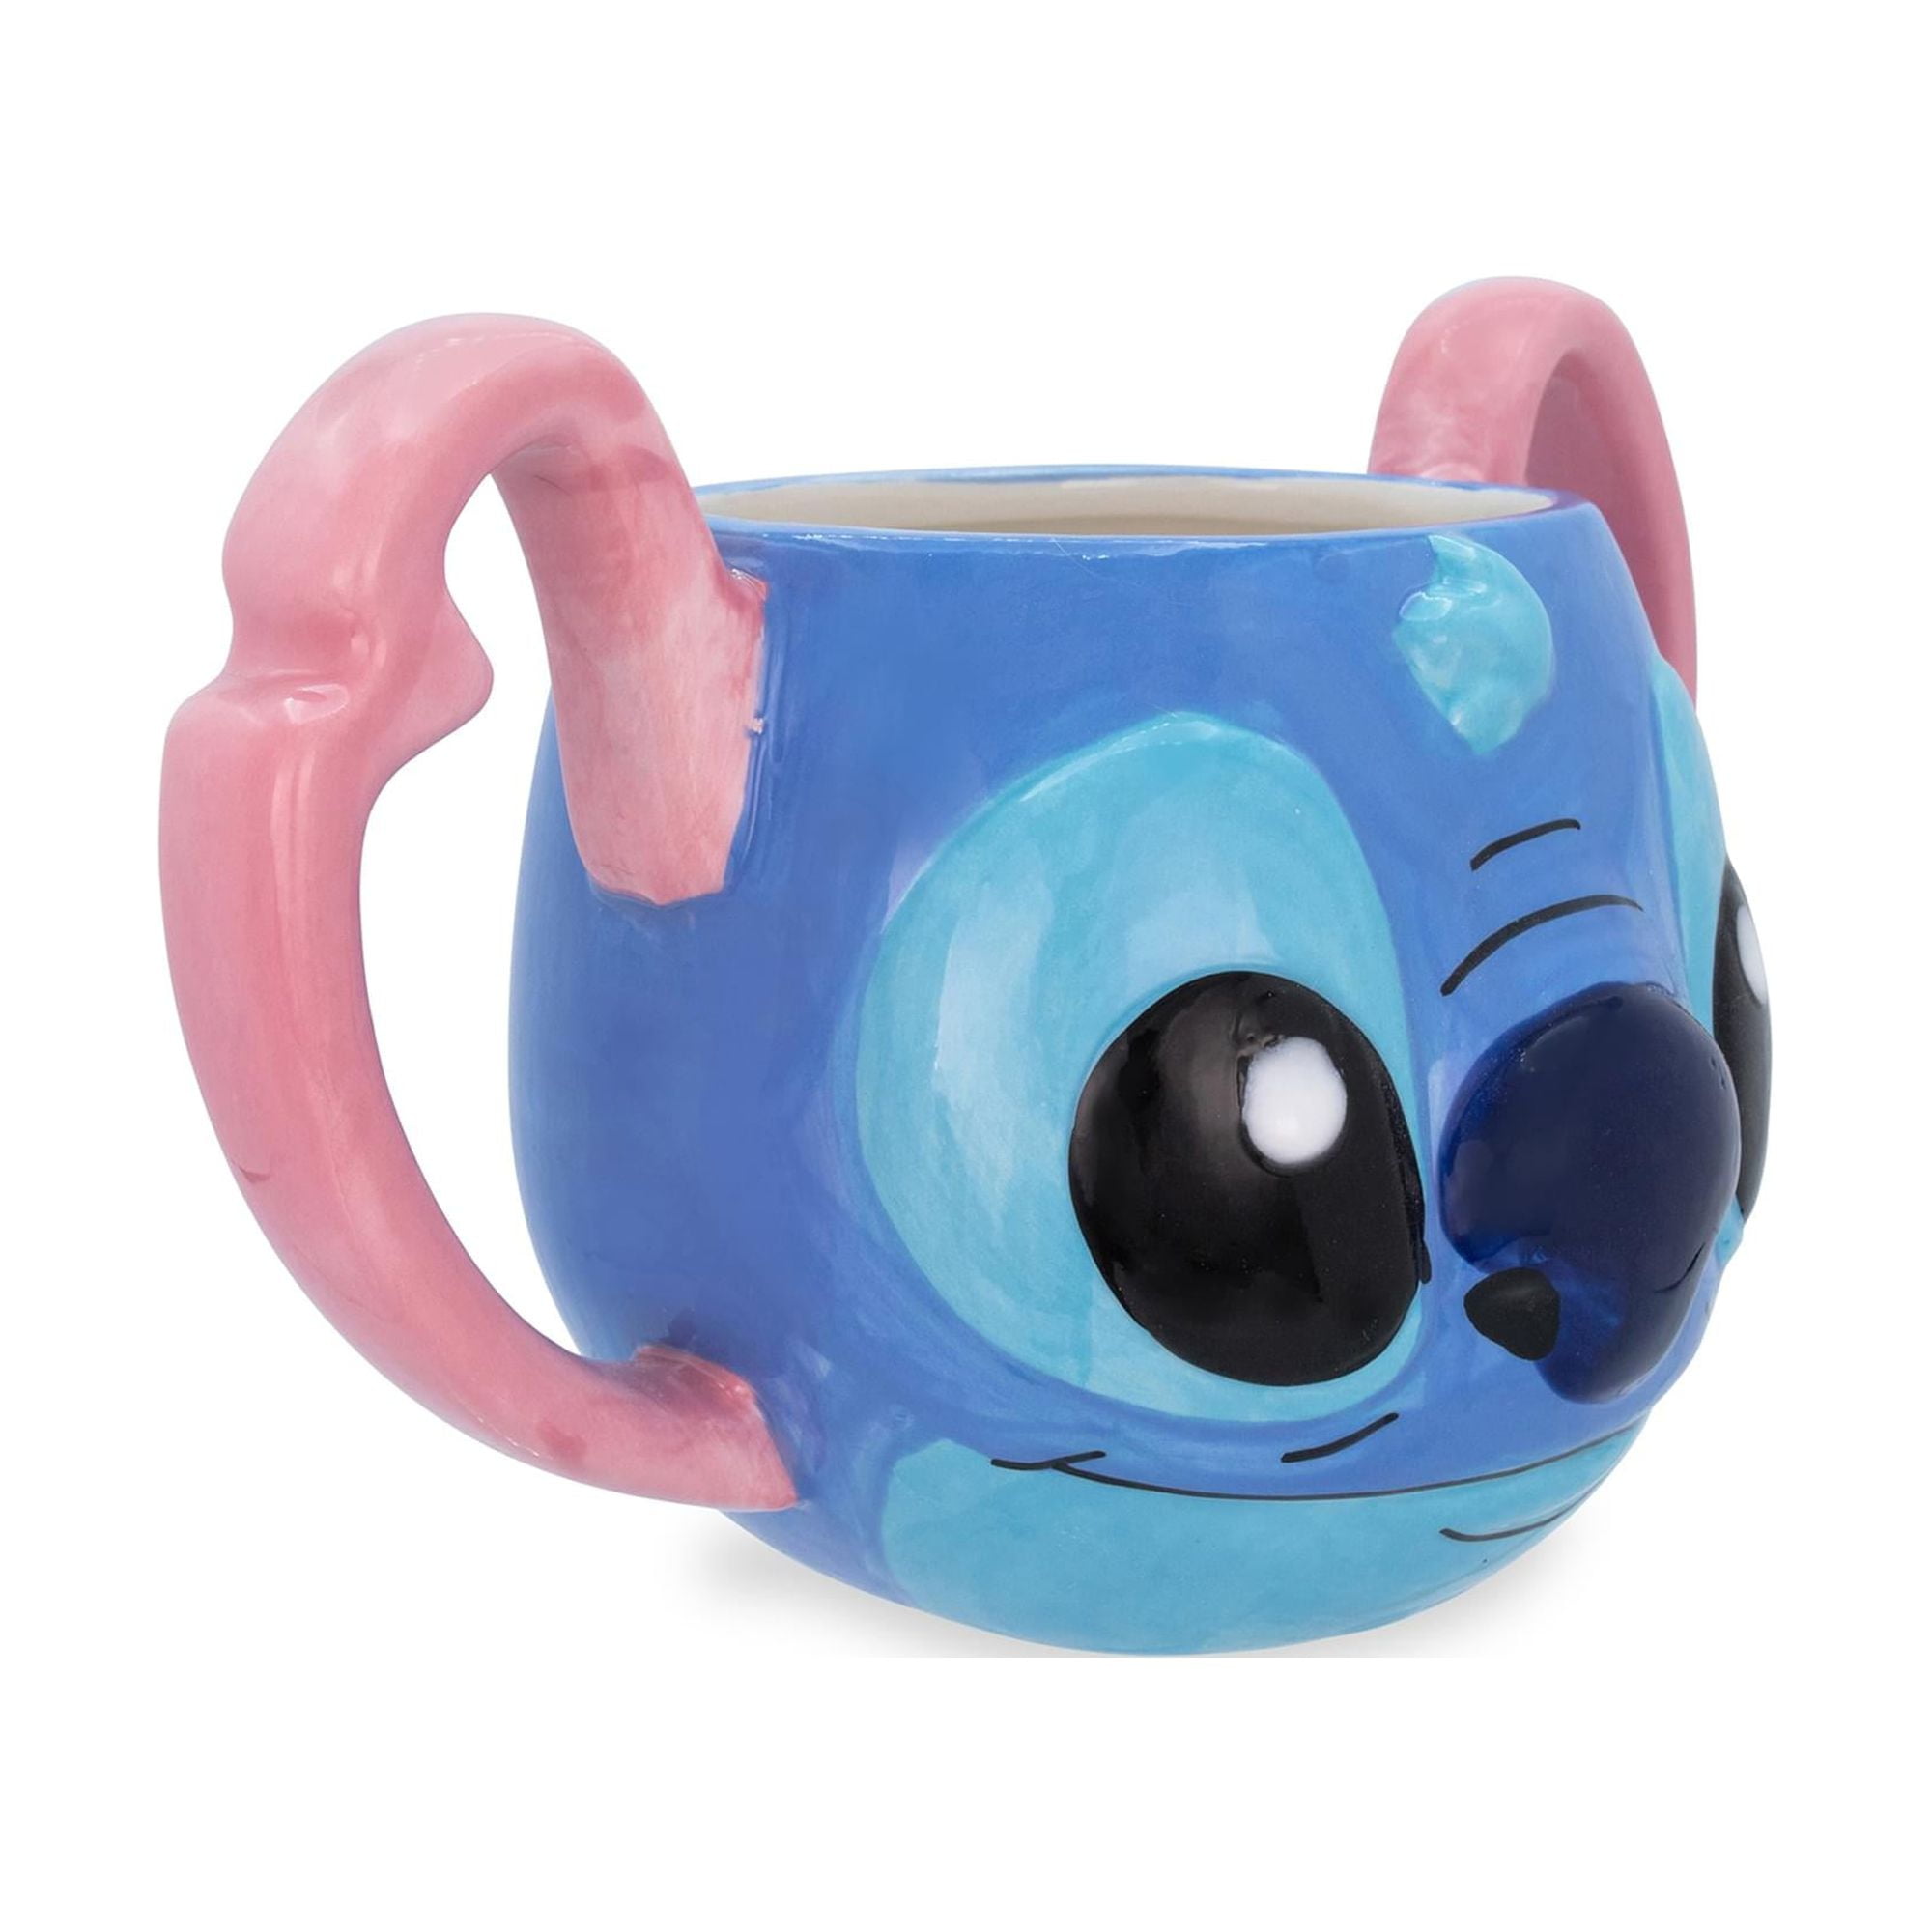 Stitch Crashes Disney Two-Tone Coffee Mug – Beauty and the Beast –  Customized